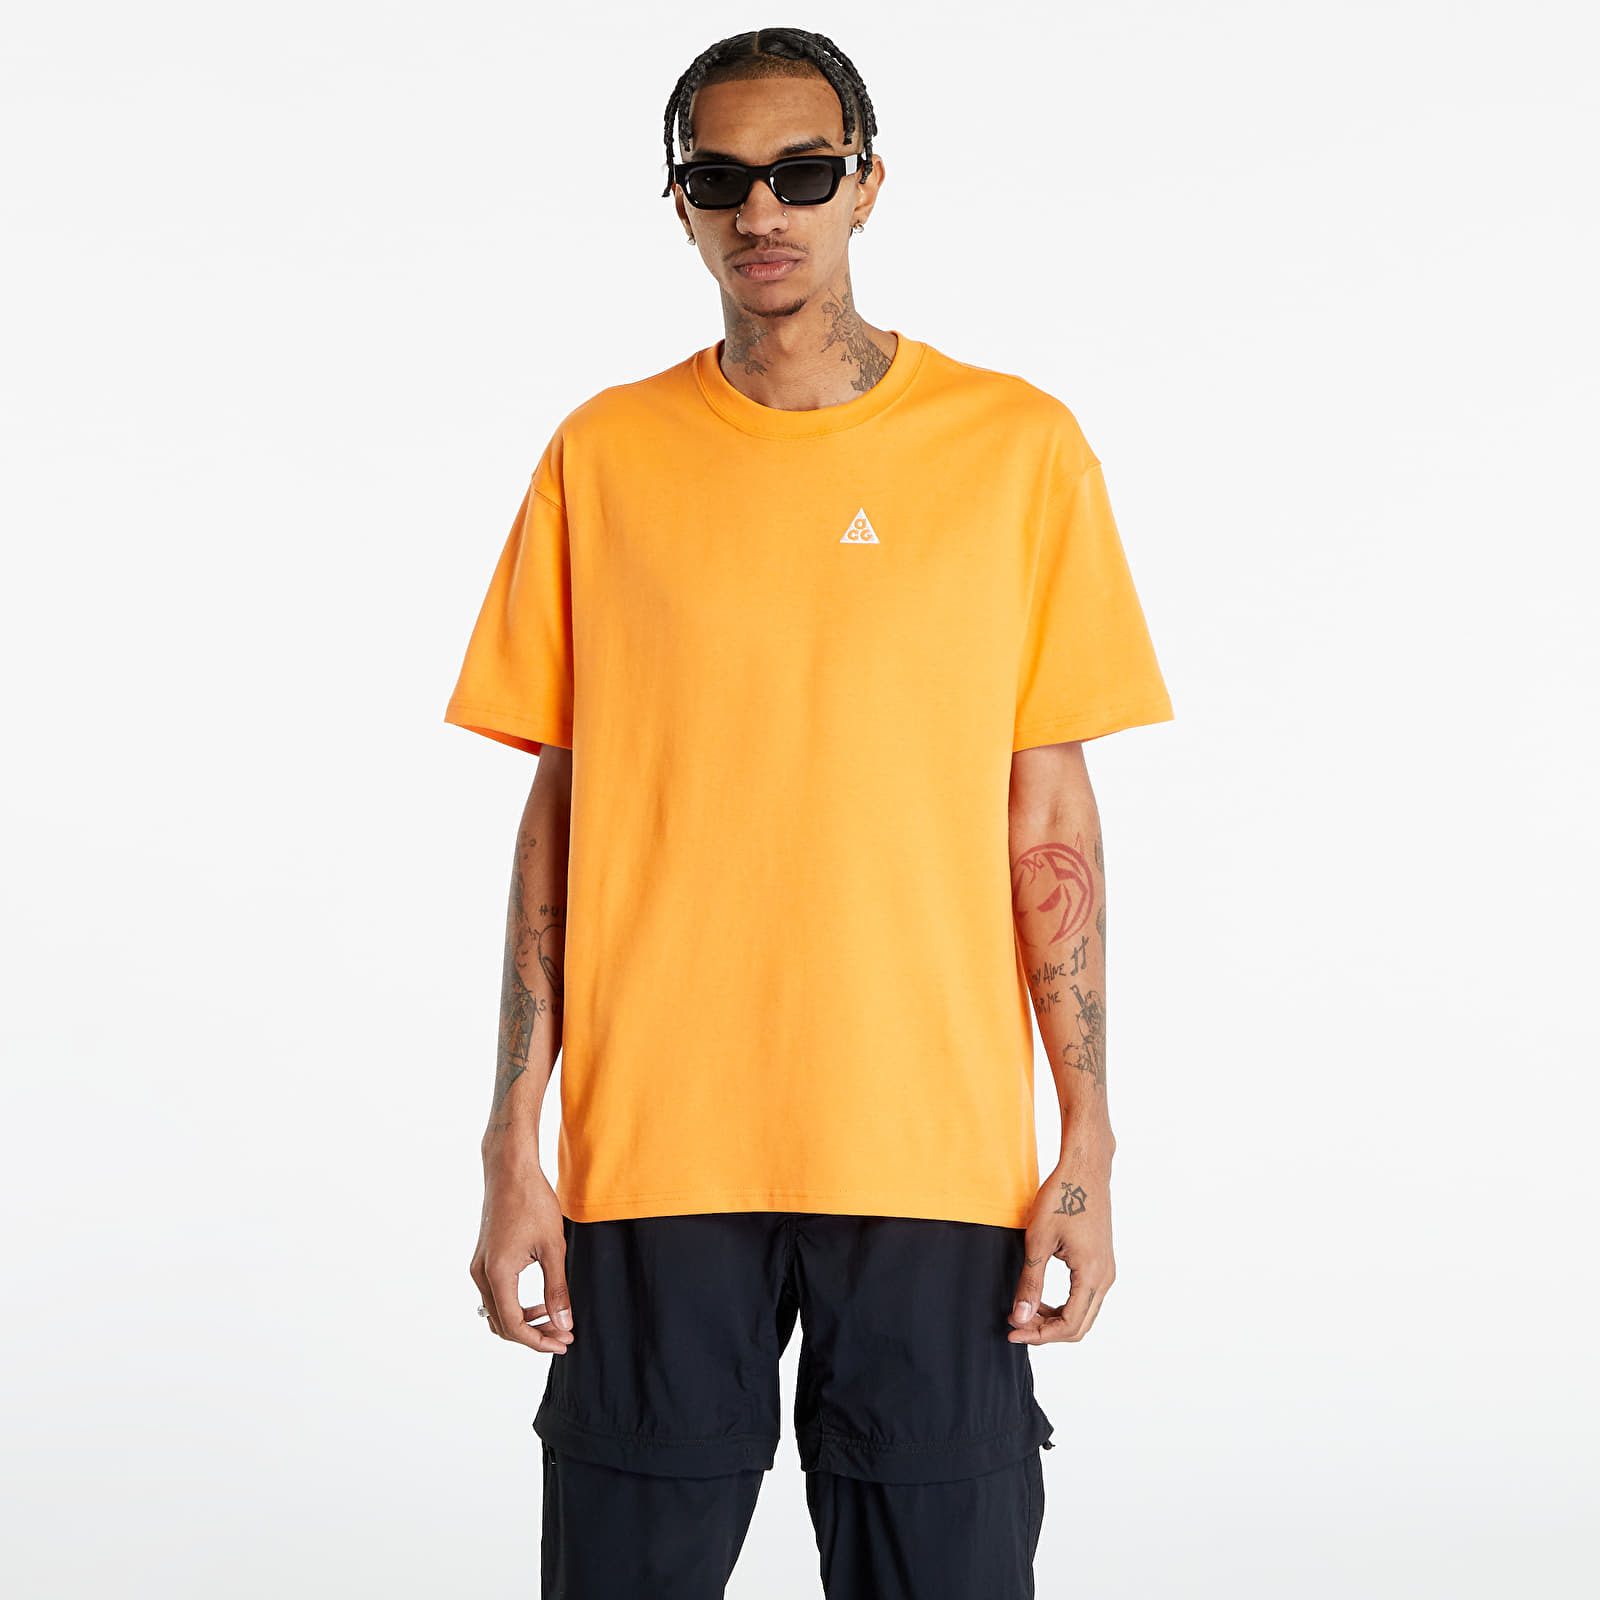 Trička Nike ACG Men's T-Shirt Bright Mandarin